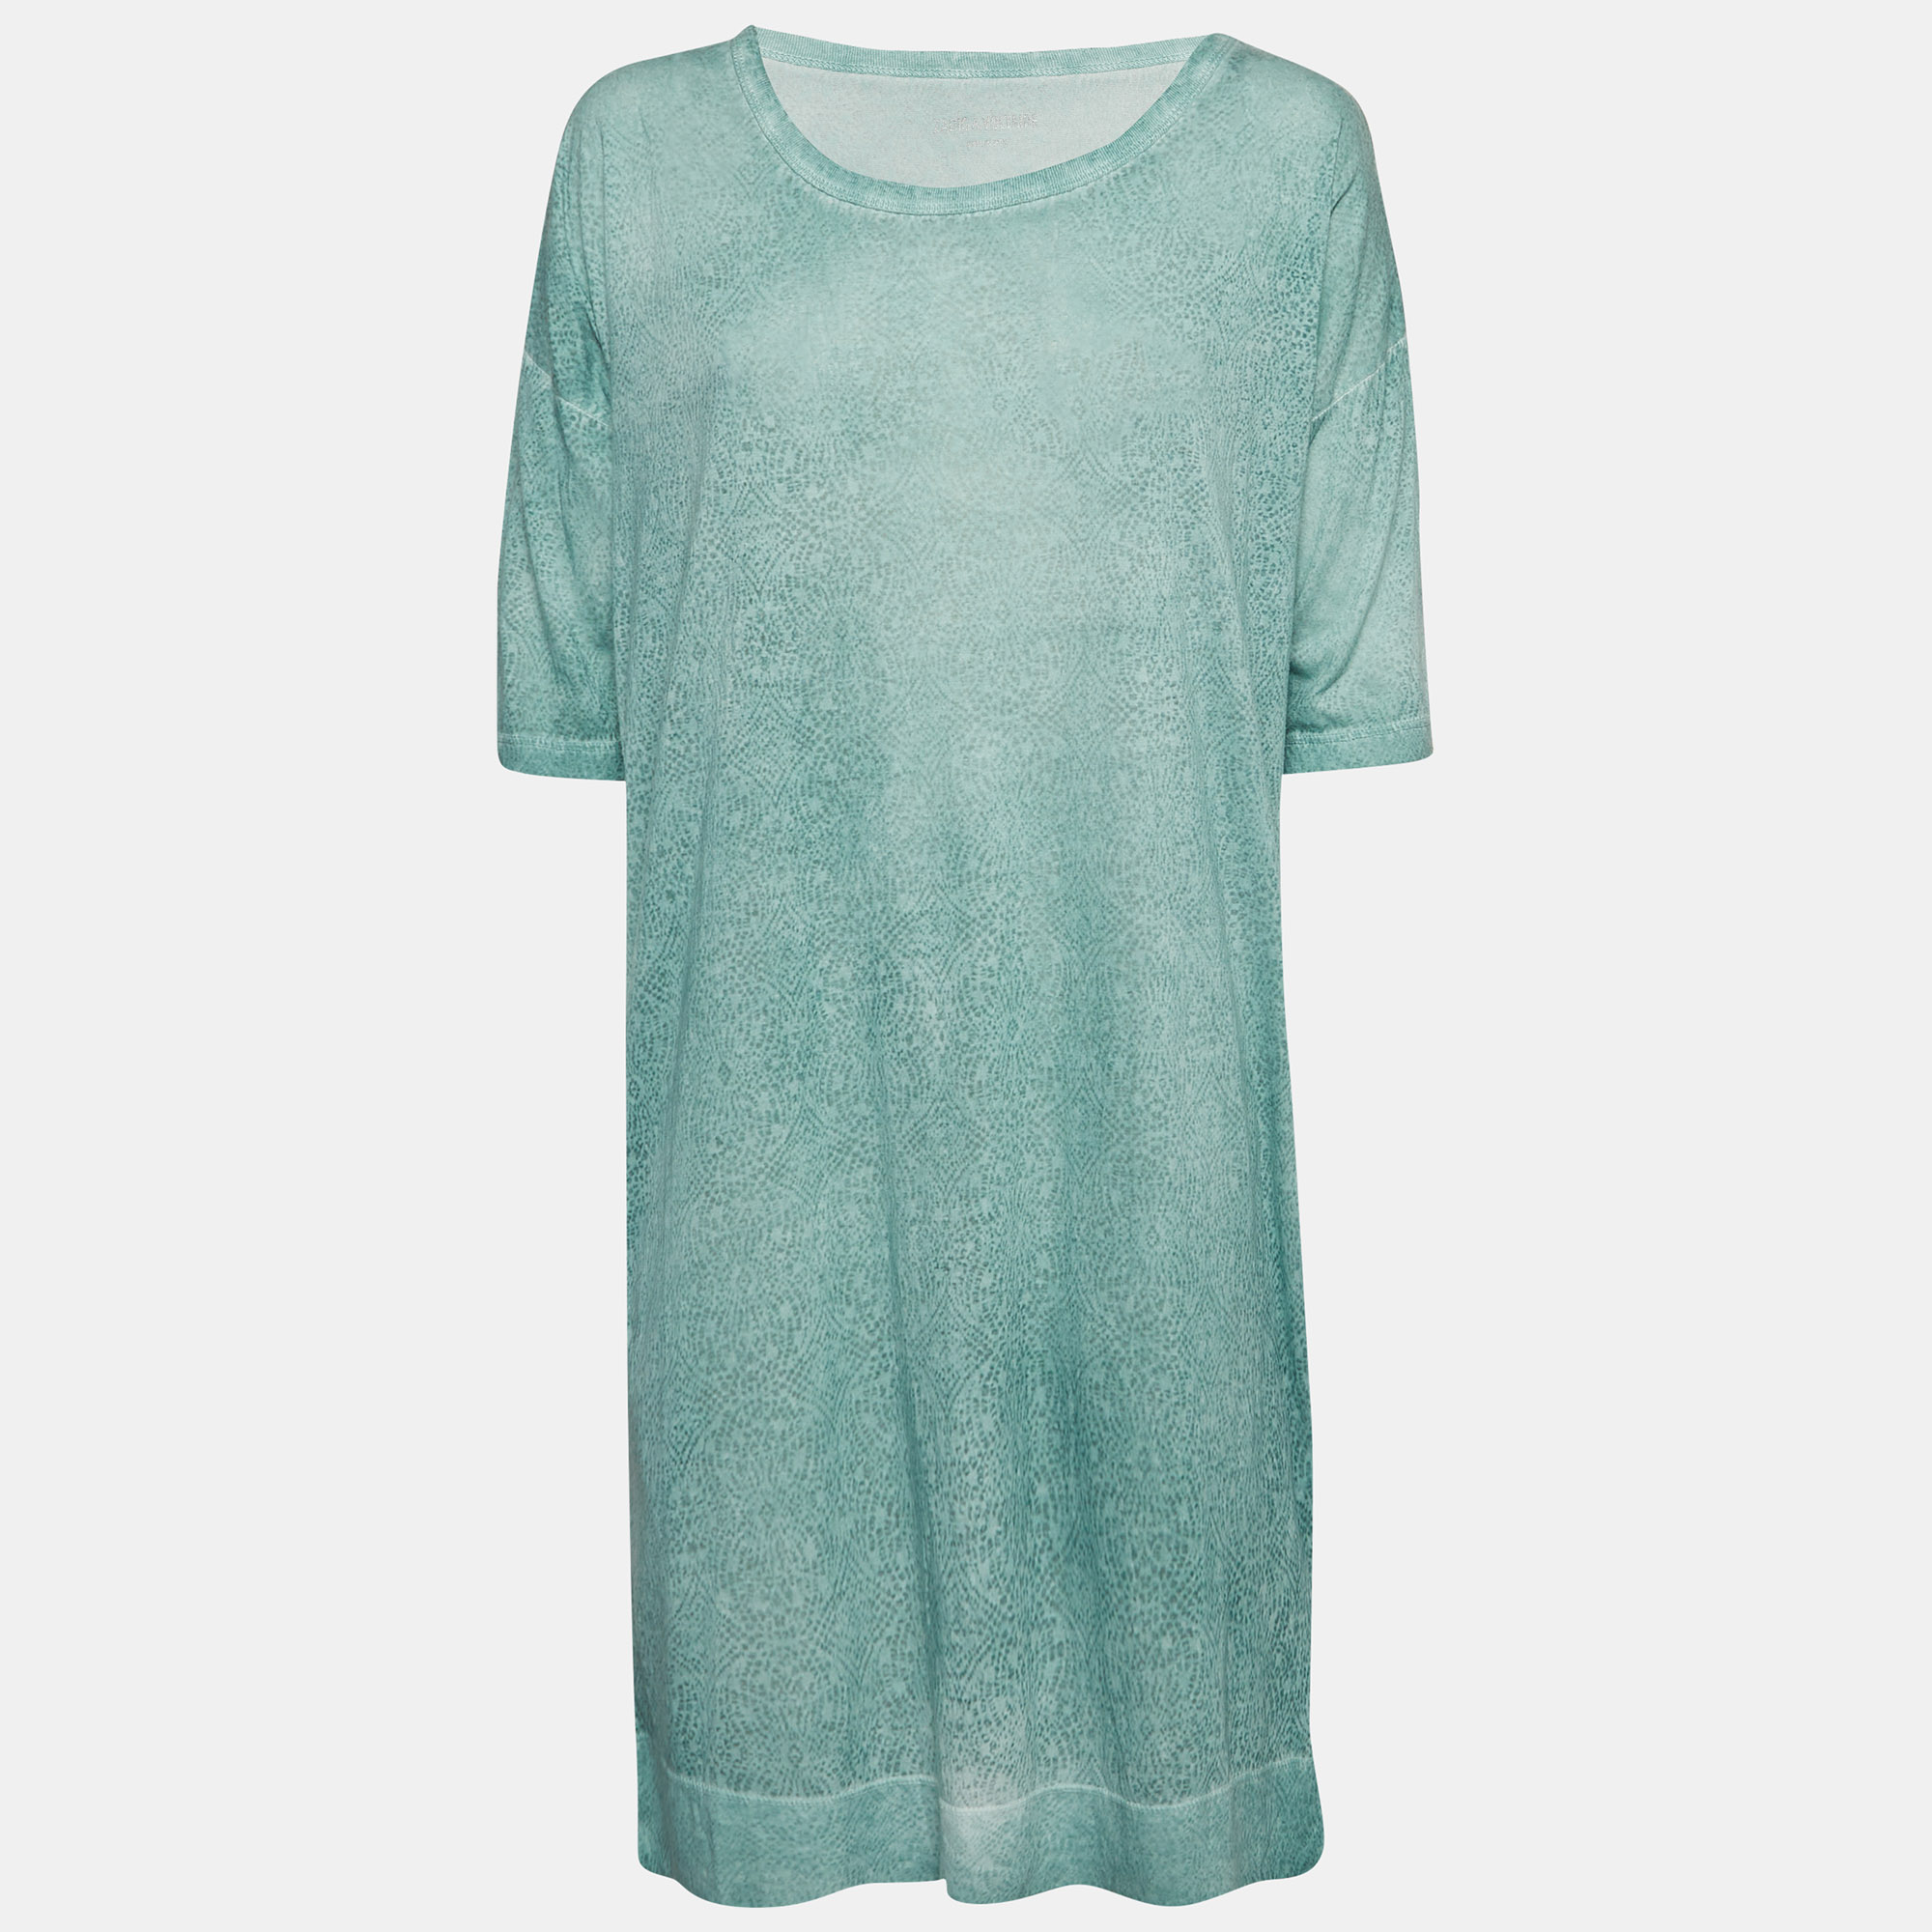 

Zadig & Voltaire Mint Green Overdye Lace Knit Mini Dress S